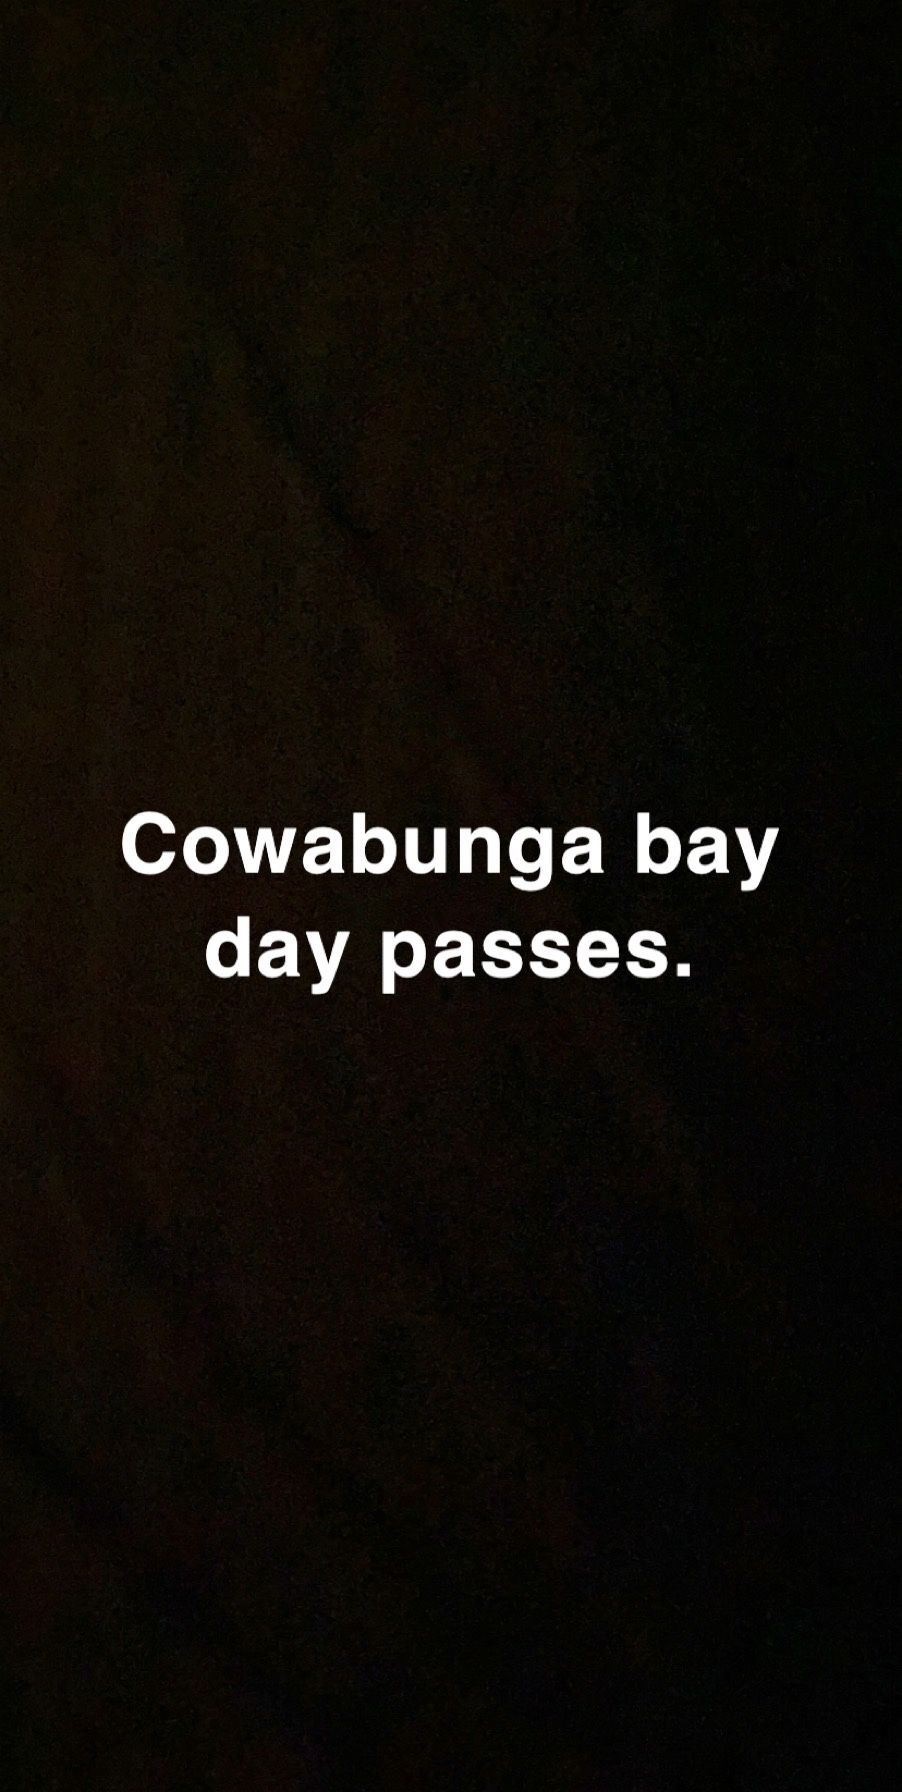 Cowabunga bay passes